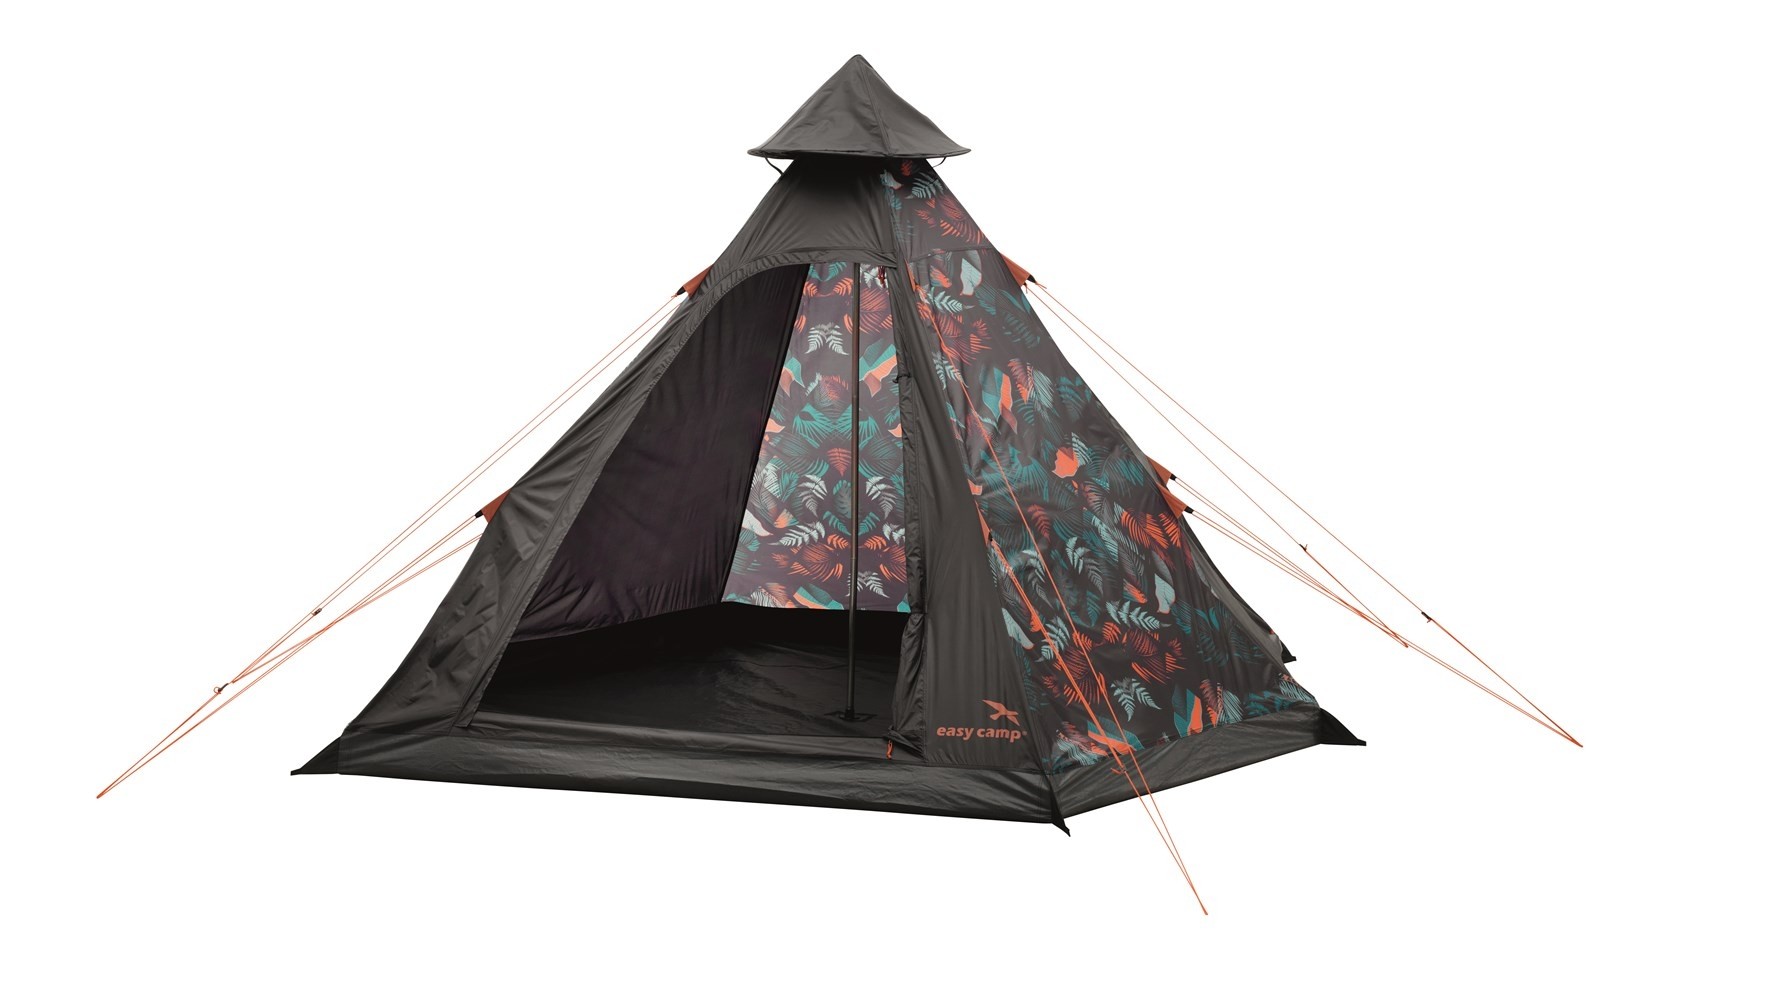 Easy camp - Палатка-вигвам четырехместная Nightshade